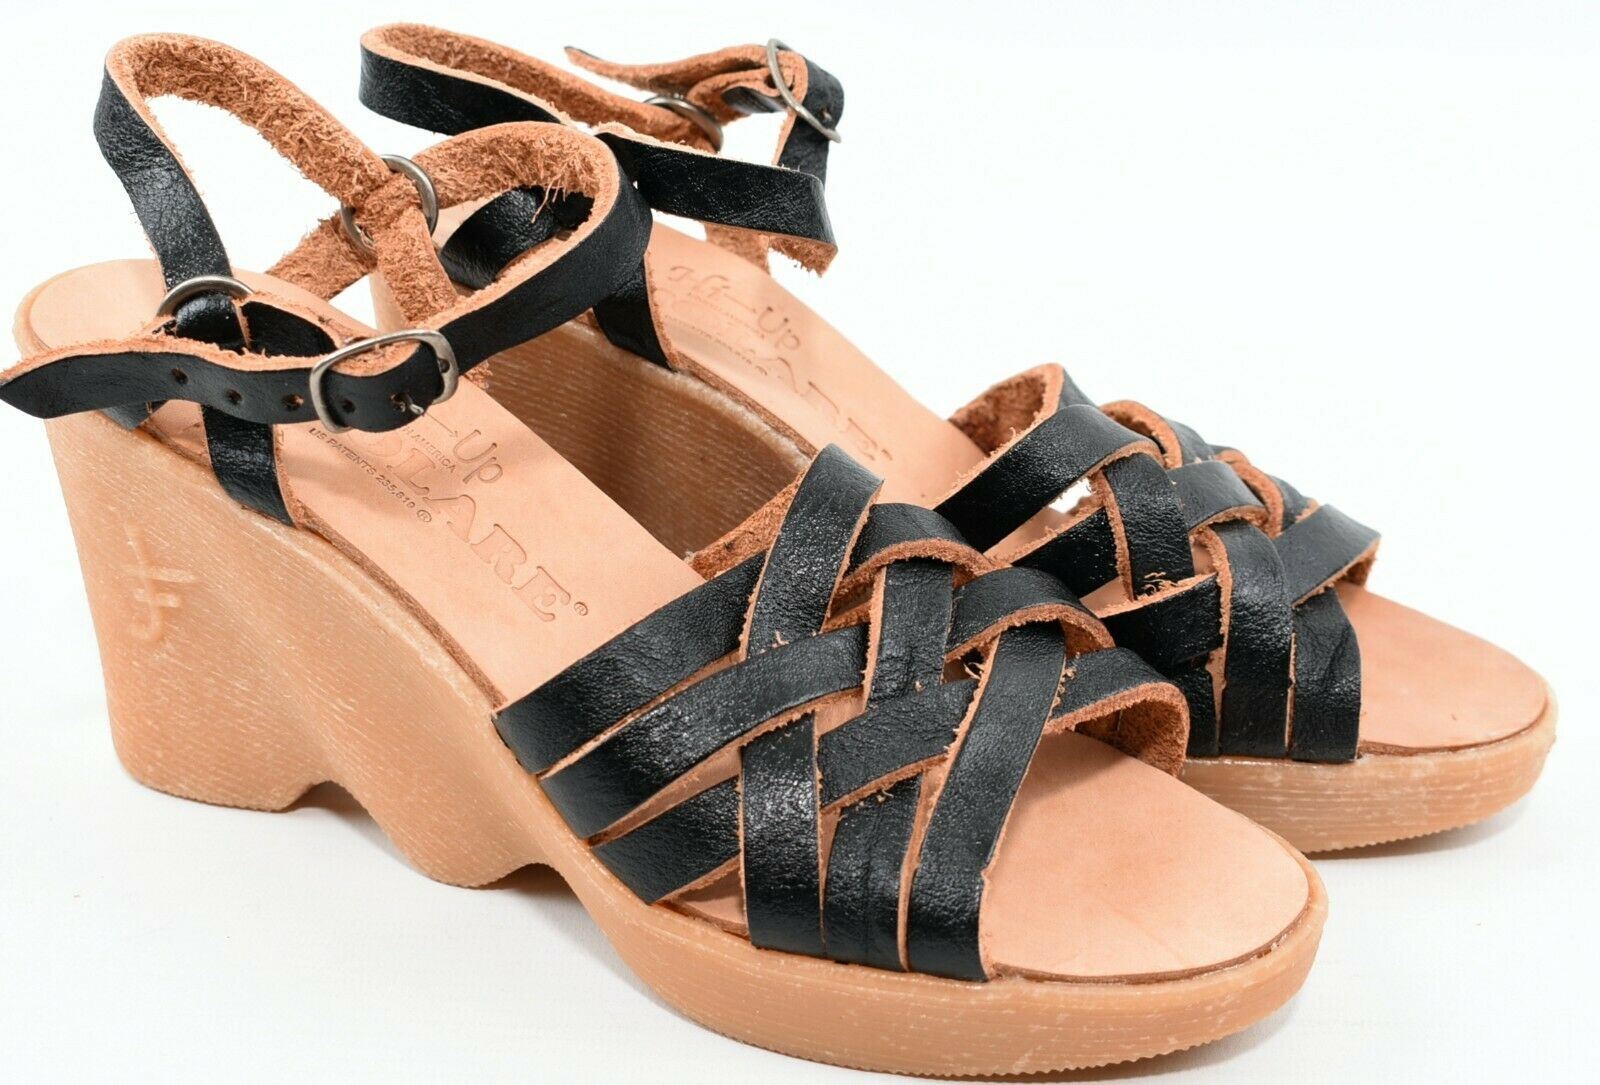 FAMOLARE Women's Black Genuine Leather Wedge Sandals, size UK 5.5